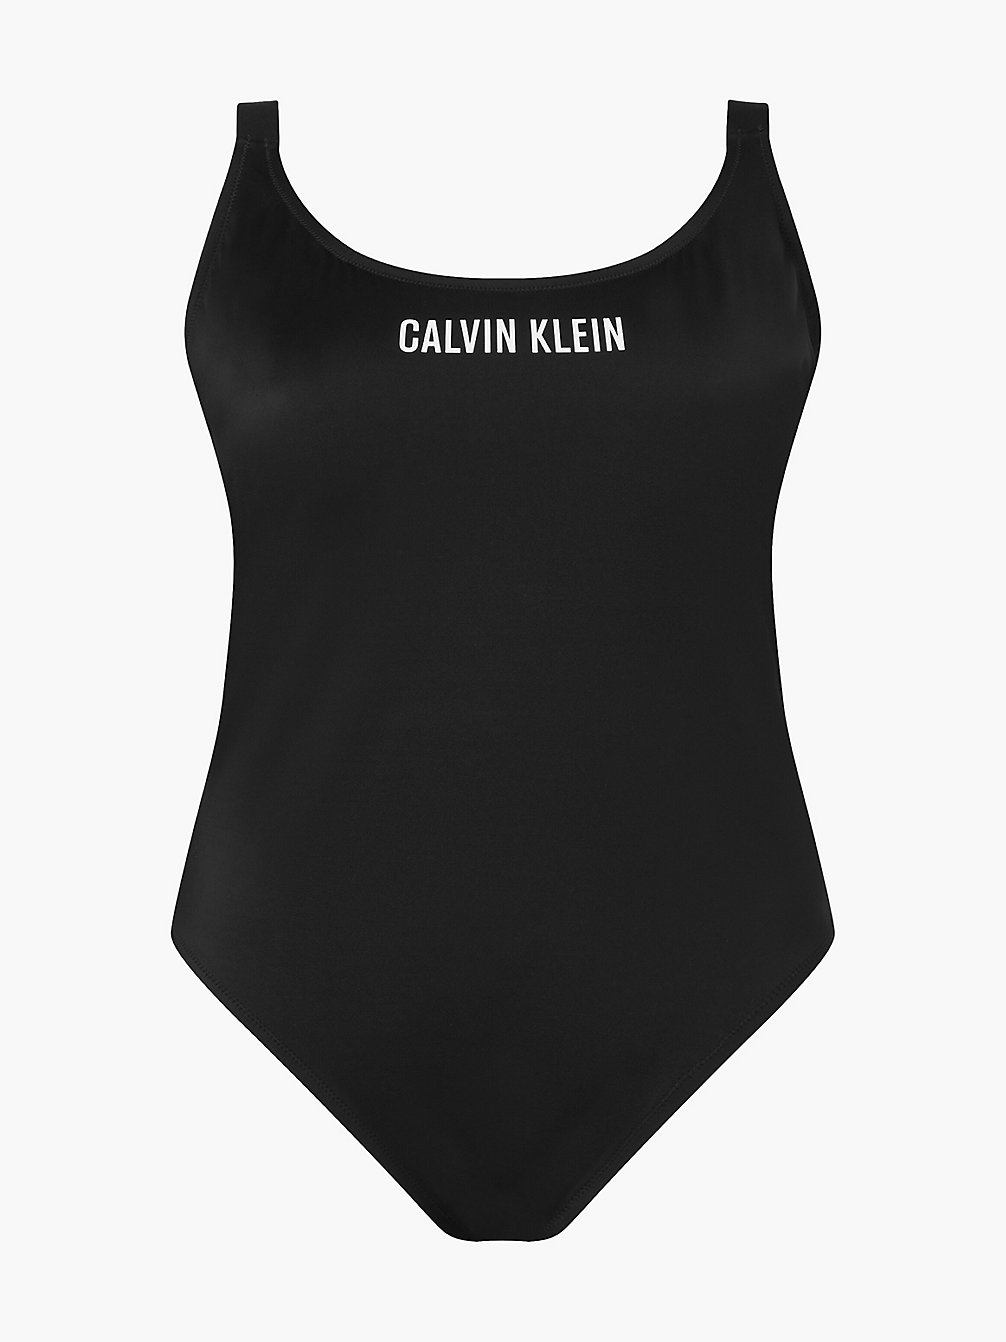 PVH BLACK Plus Size Swimsuit - Intense Power undefined women Calvin Klein